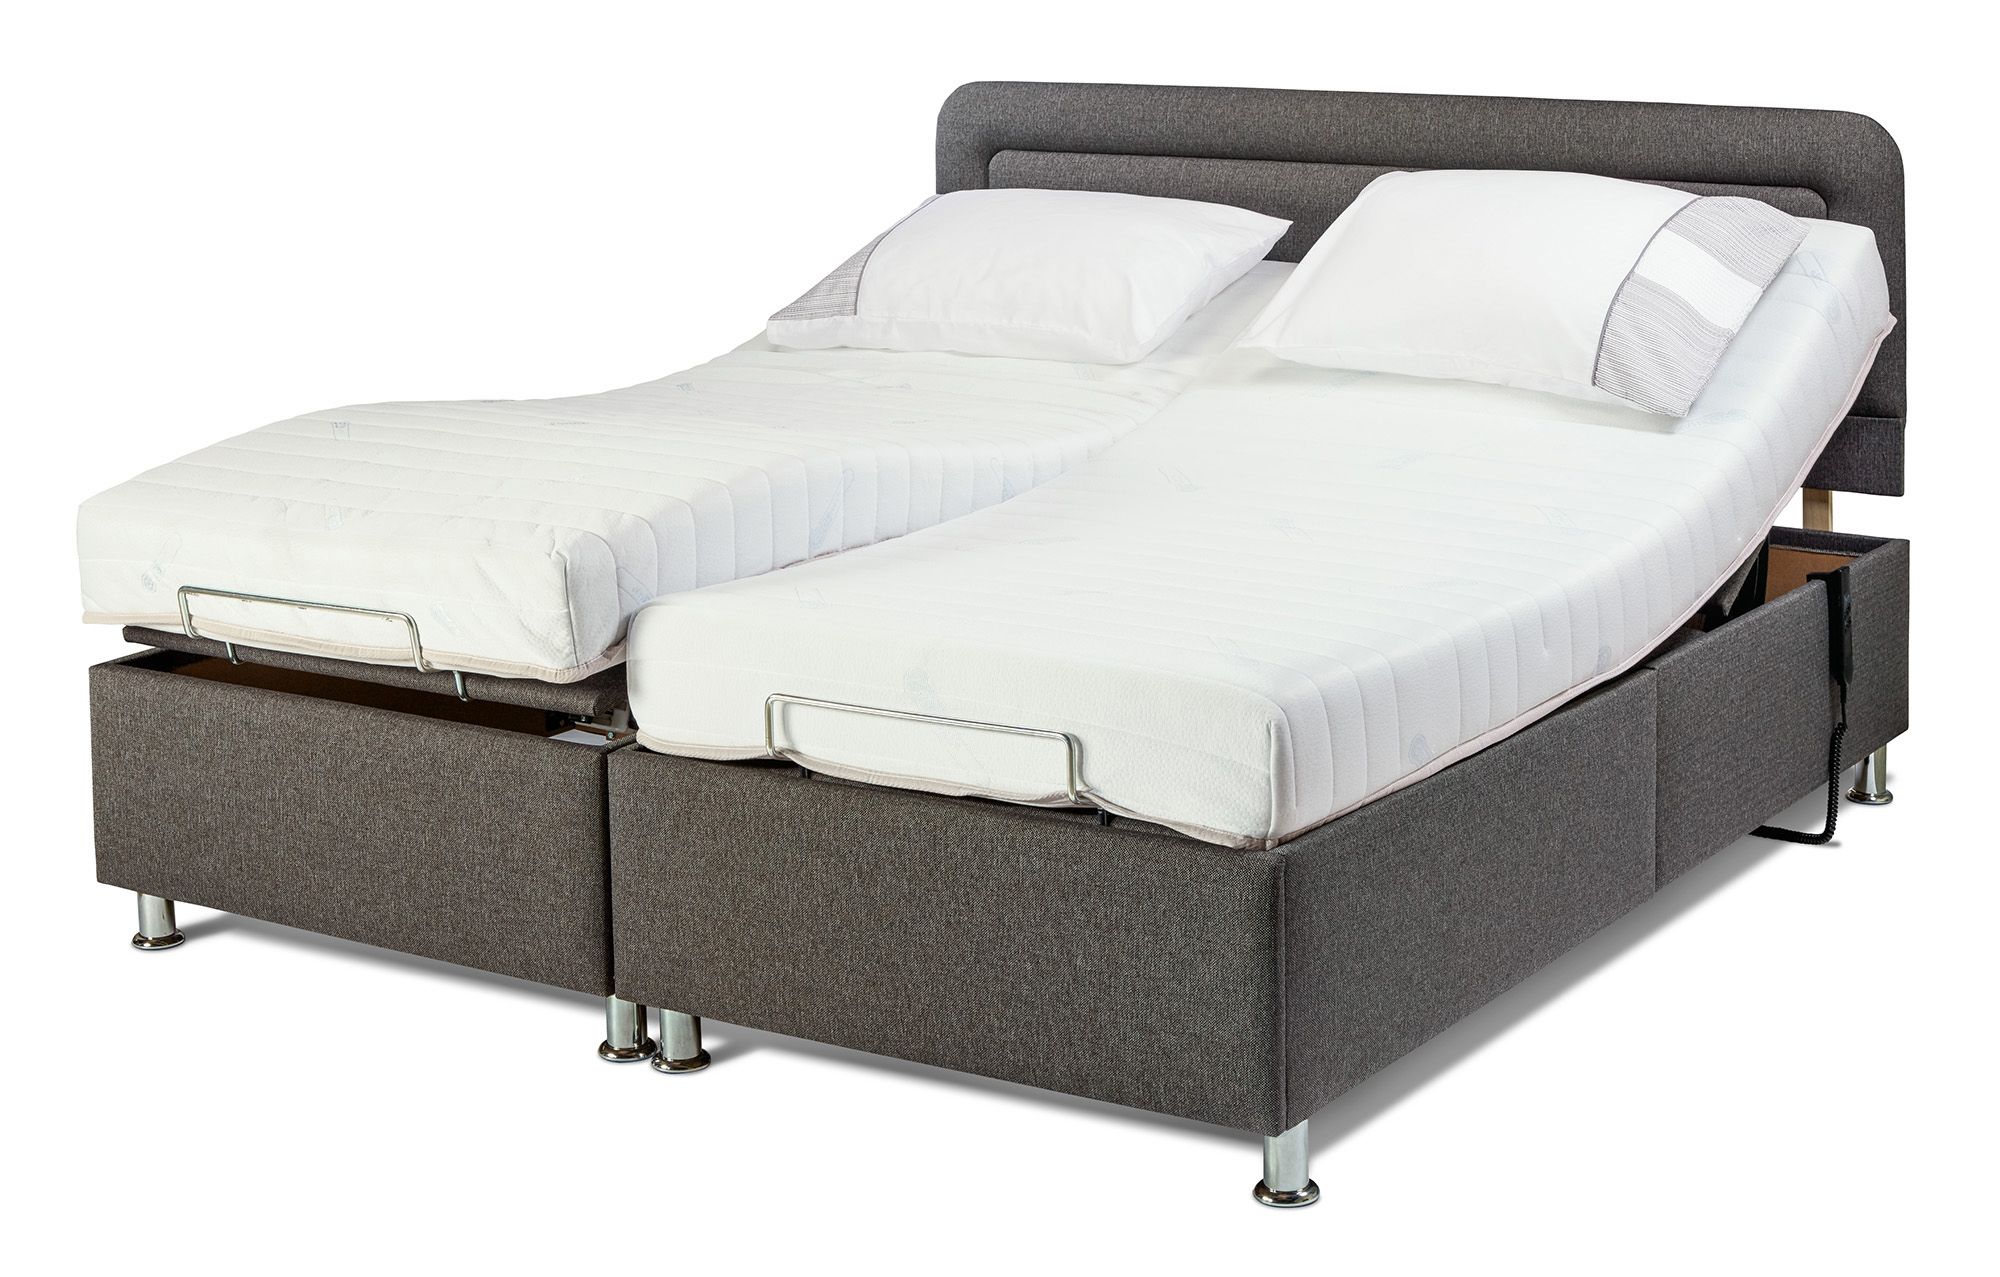 super single bed mattress sale